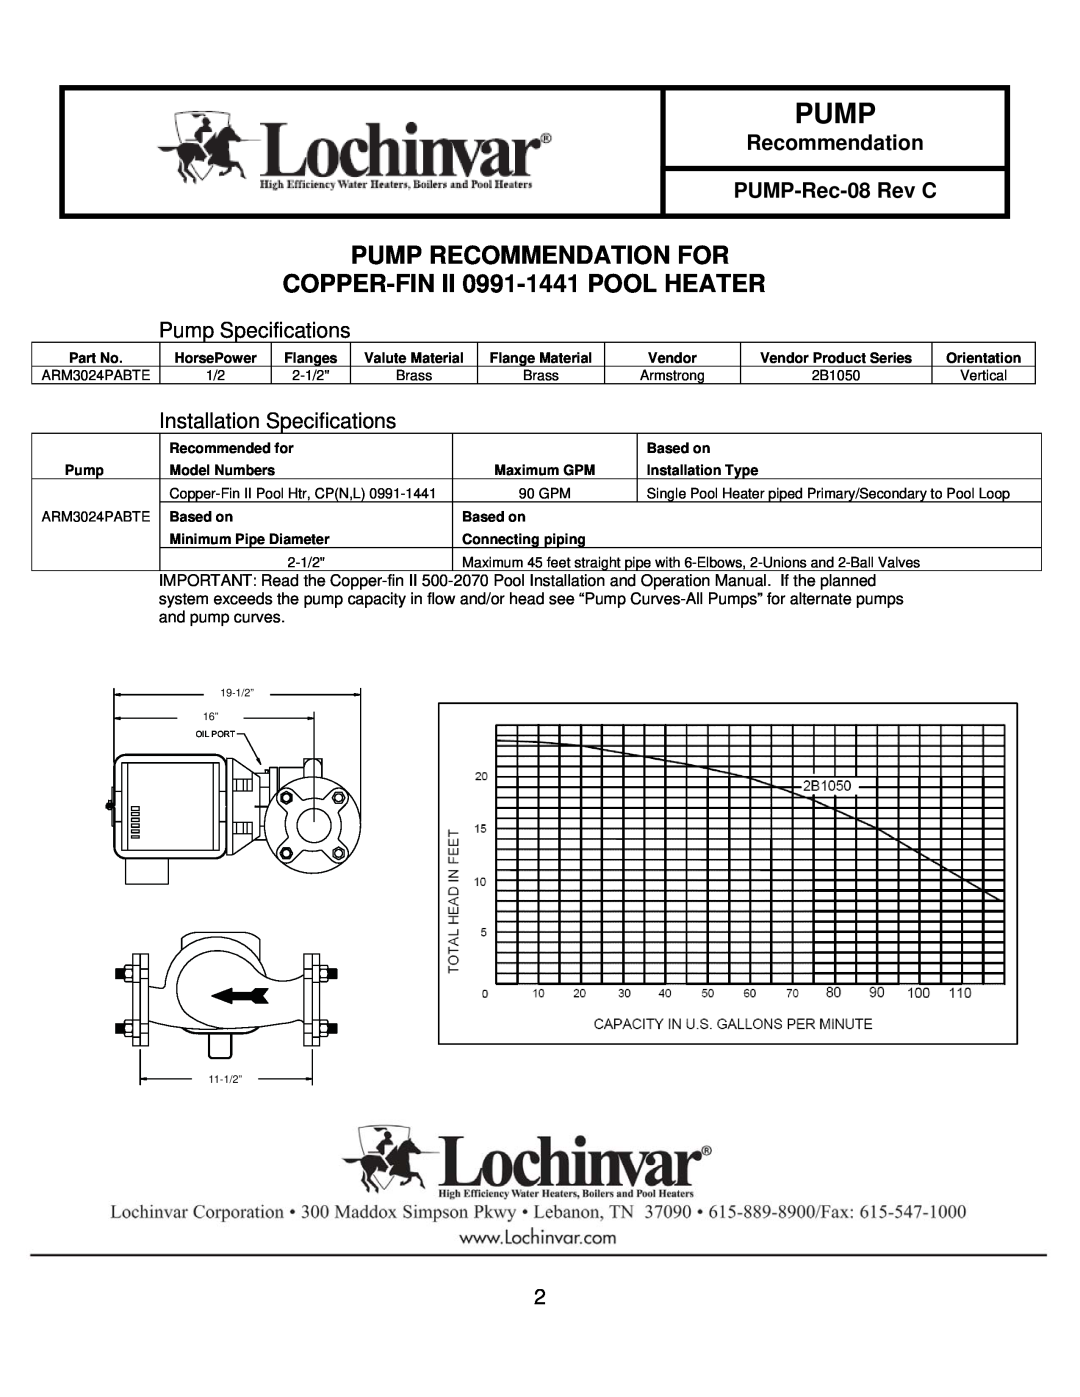 Lochinvar 401-751 COPPER-FINII 0991-1441POOL HEATER, Pump Recommendation For, Pump Specifications, PUMP-Rec-08Rev C 